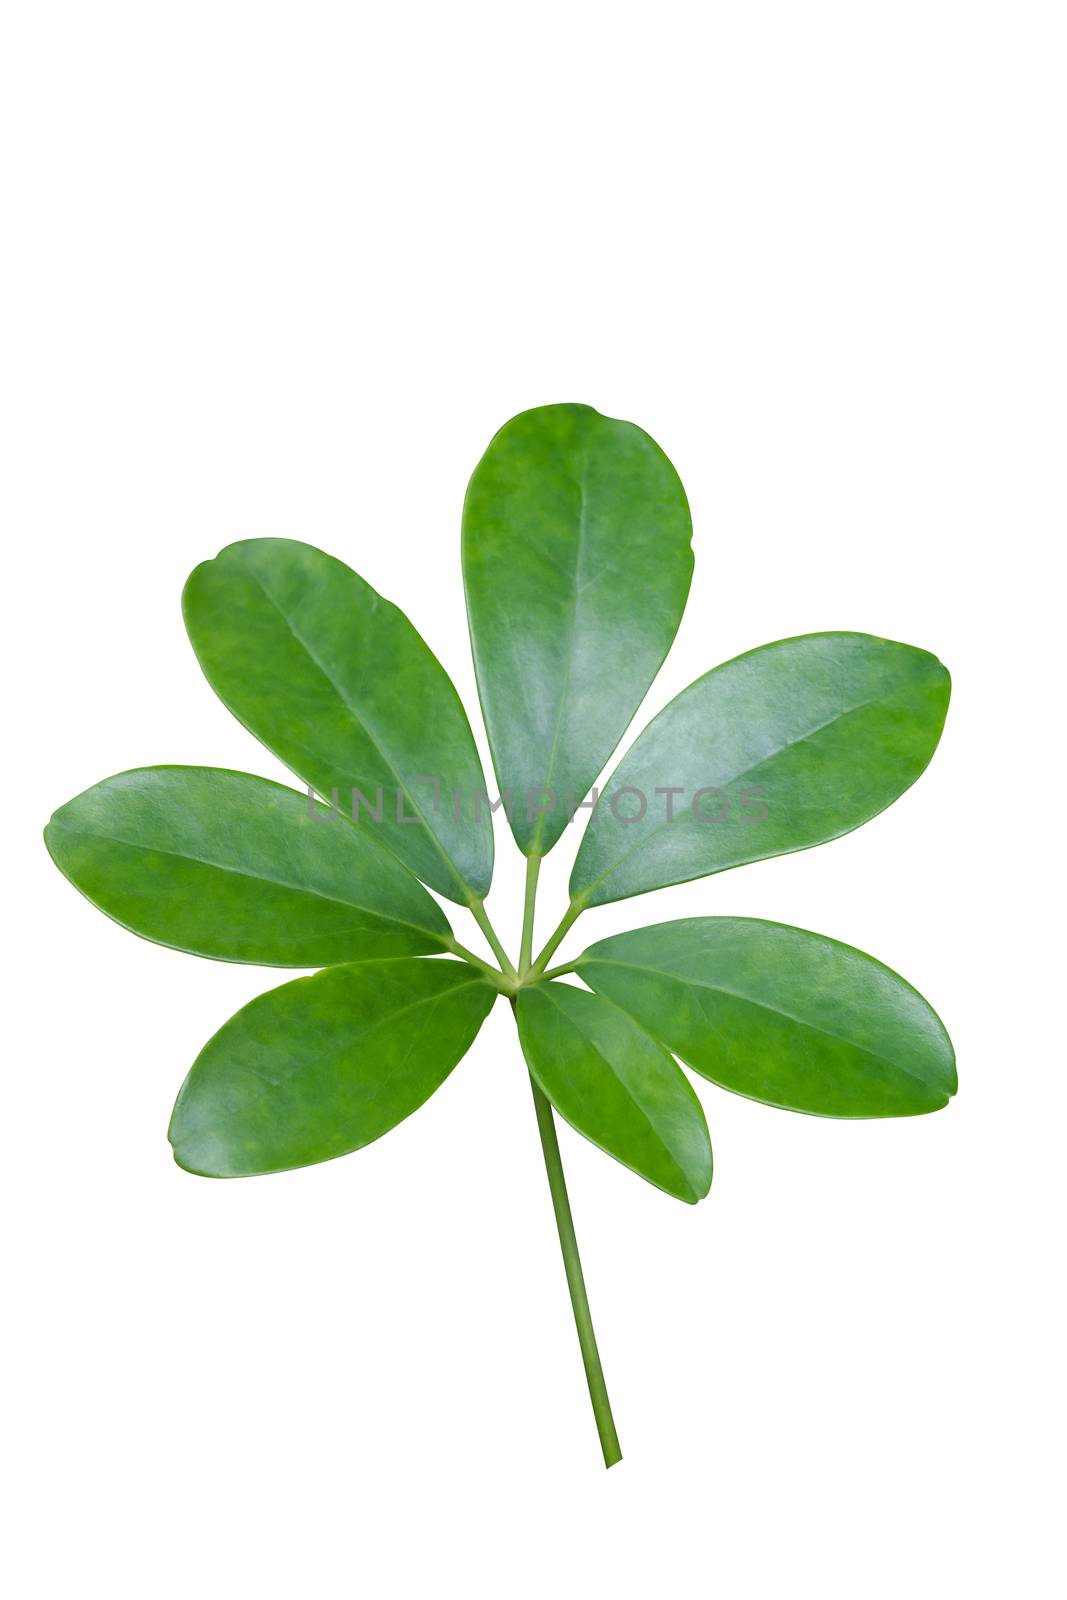 green leaves (Schefflera leucantha R. Vig.) isolated on white background, foliage  herb of Thai folk plants.